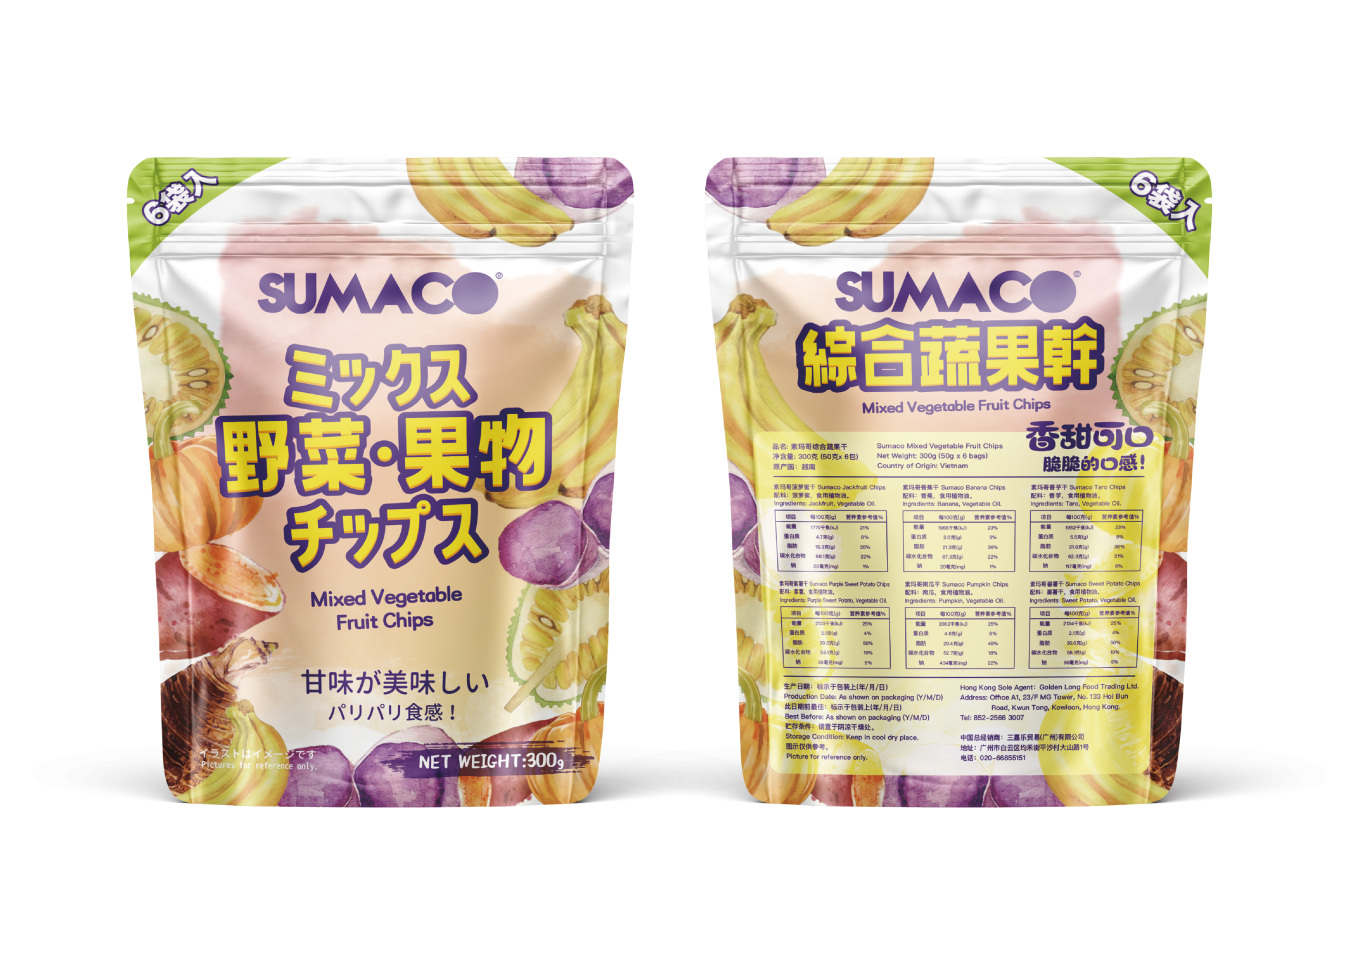 SUMACO素玛哥综合蔬果干零食产品包装设计图3